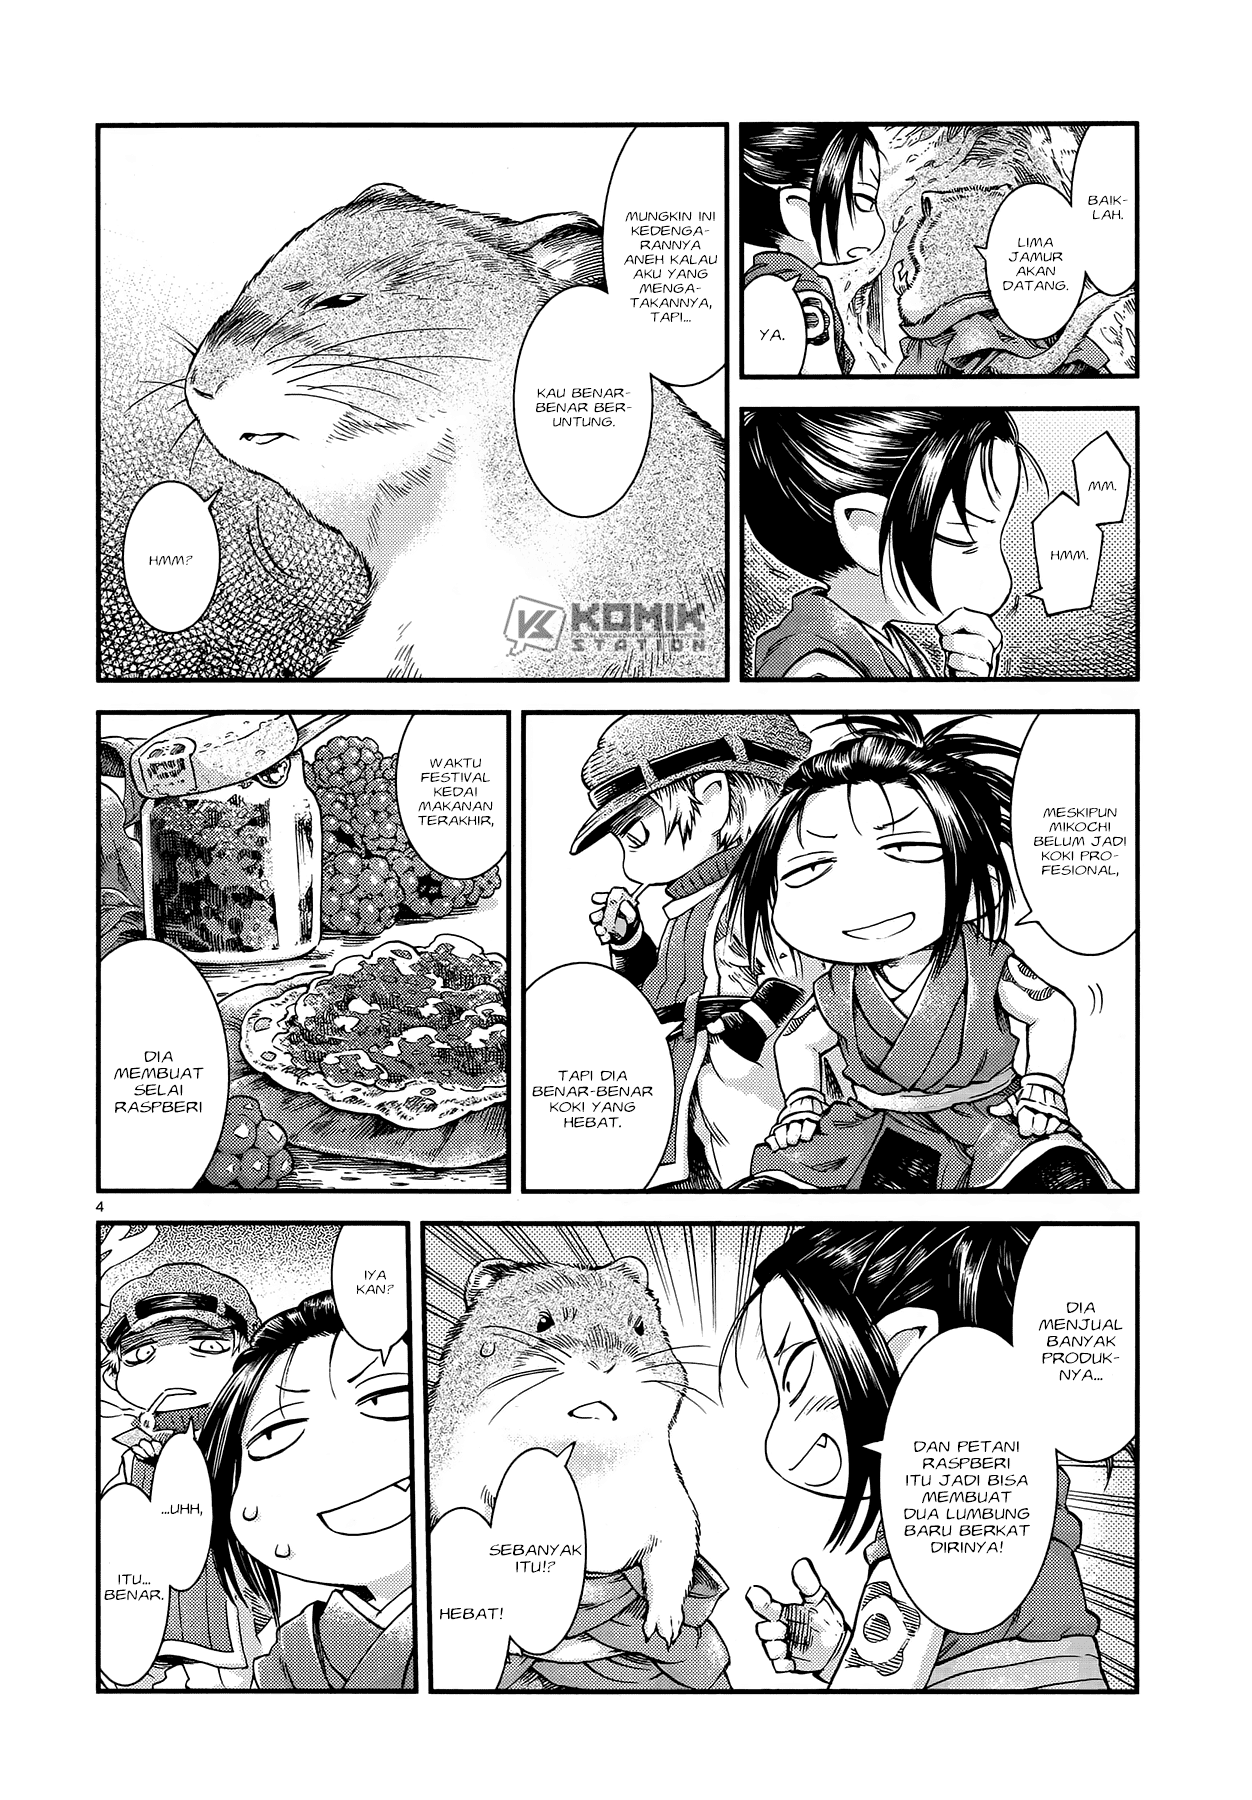 Hakumei to Mikochi Chapter 51